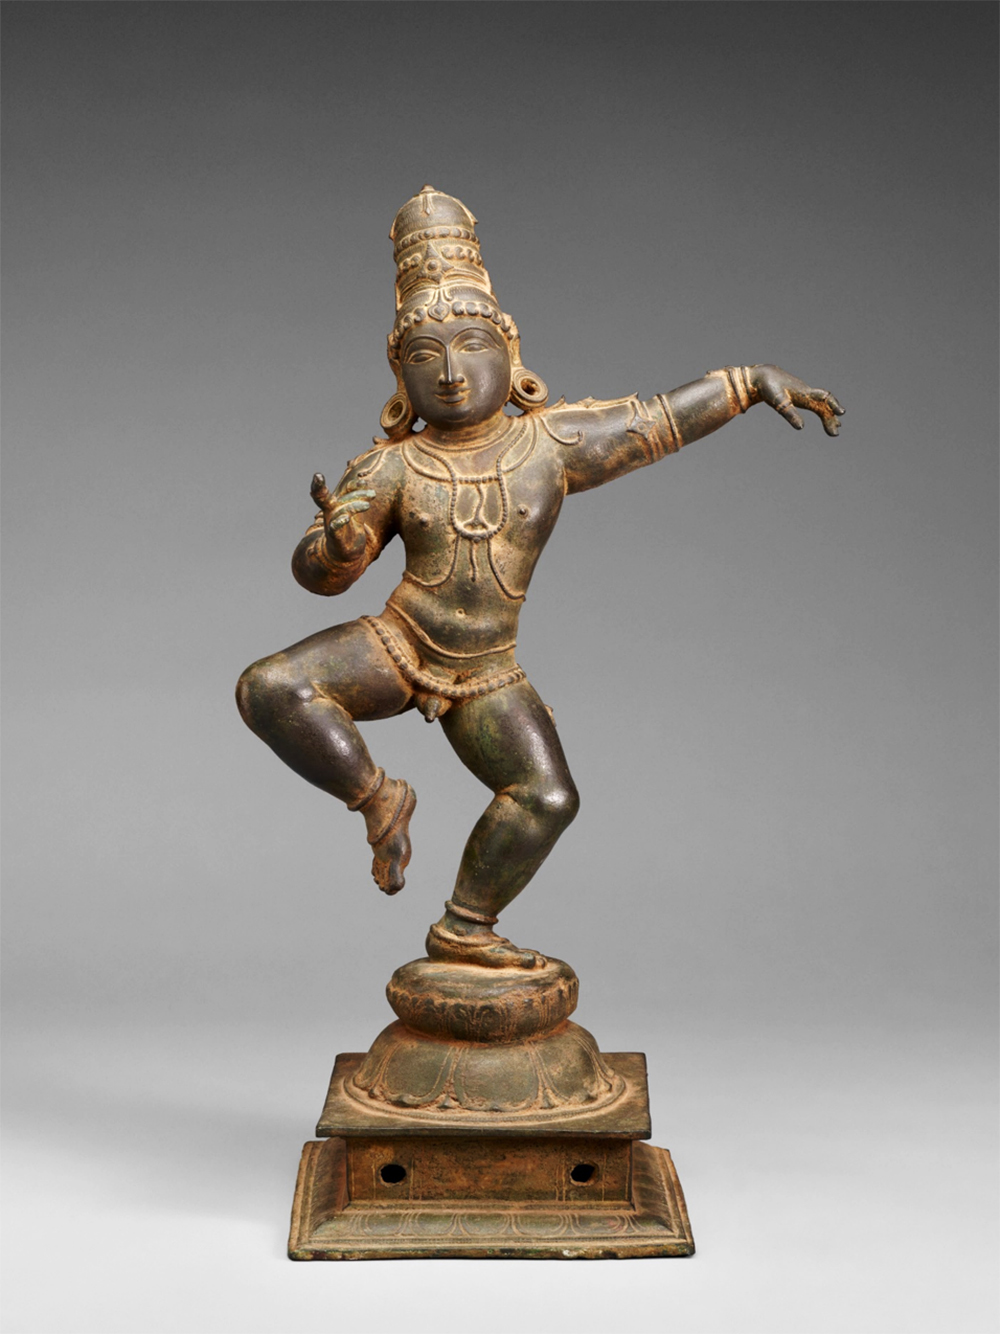 The Poet-Saint Sambandar, 1200–1400, India; Tamil Nadu, bronze, Asian Art Museum of San Francisco, The Avery Brundage Collection, B60B1016